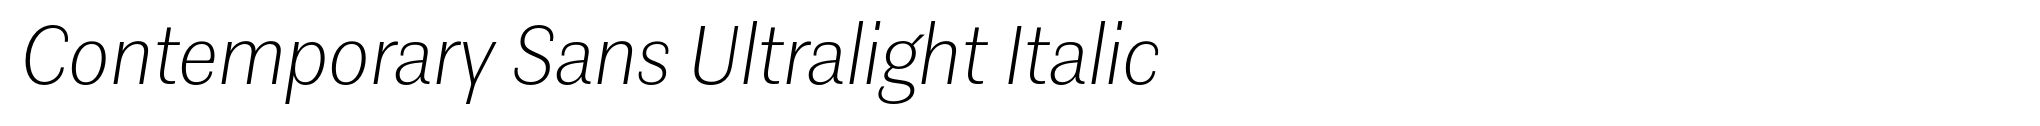 Contemporary Sans Ultralight Italic image